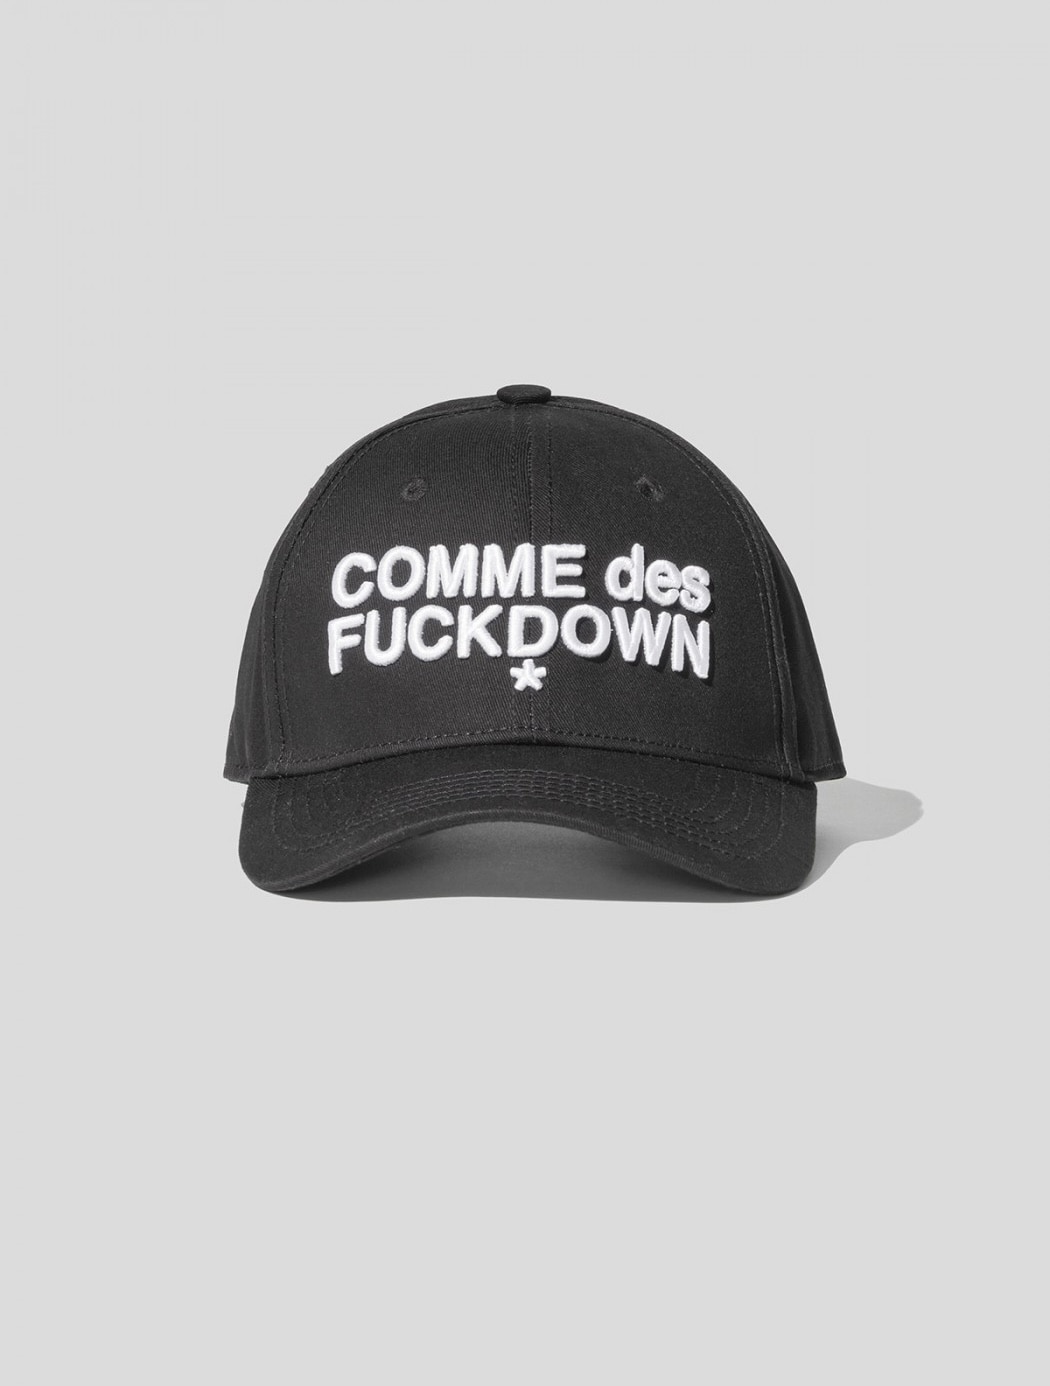 COMME des FUCKDOWN スナップバック キャップ ブラック/カモ